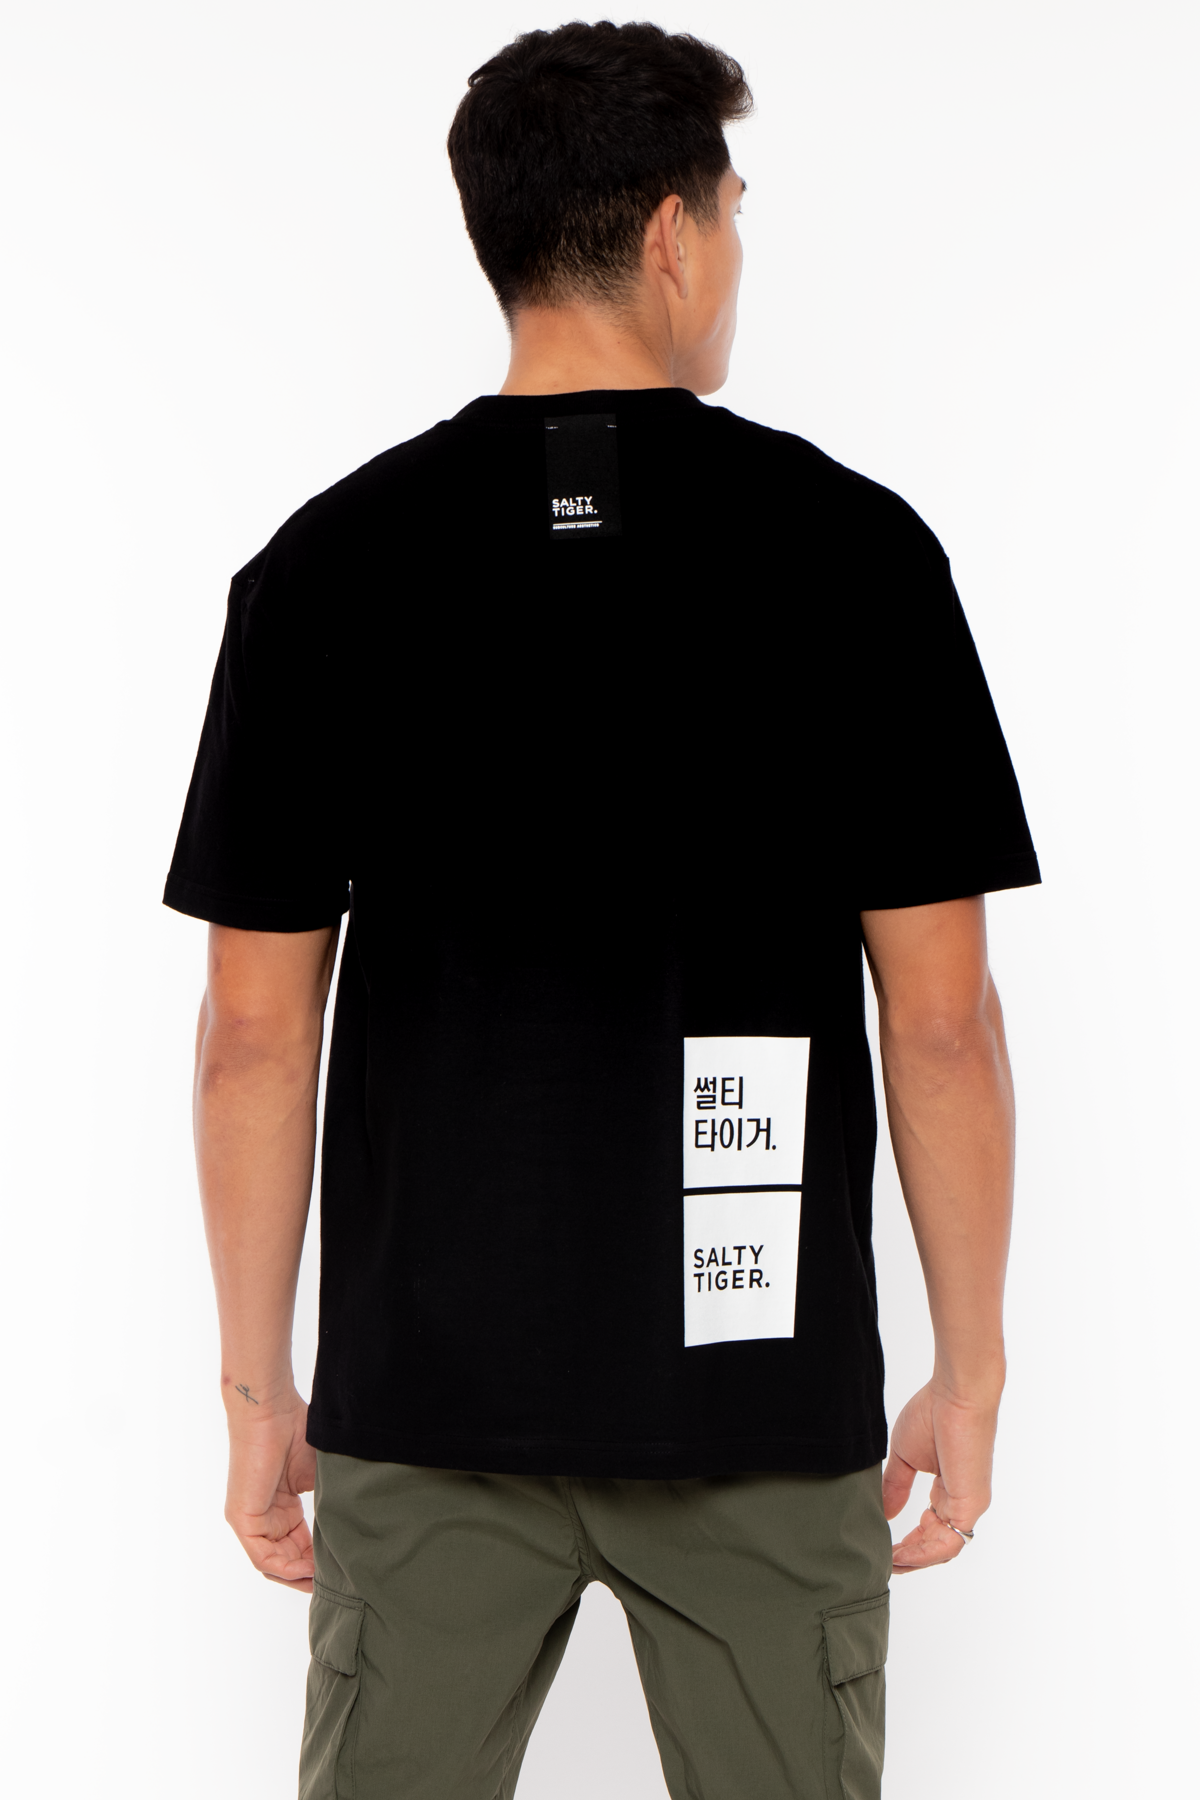 Heavy S/S T-Shirt - STTP00145FL-001 - Black